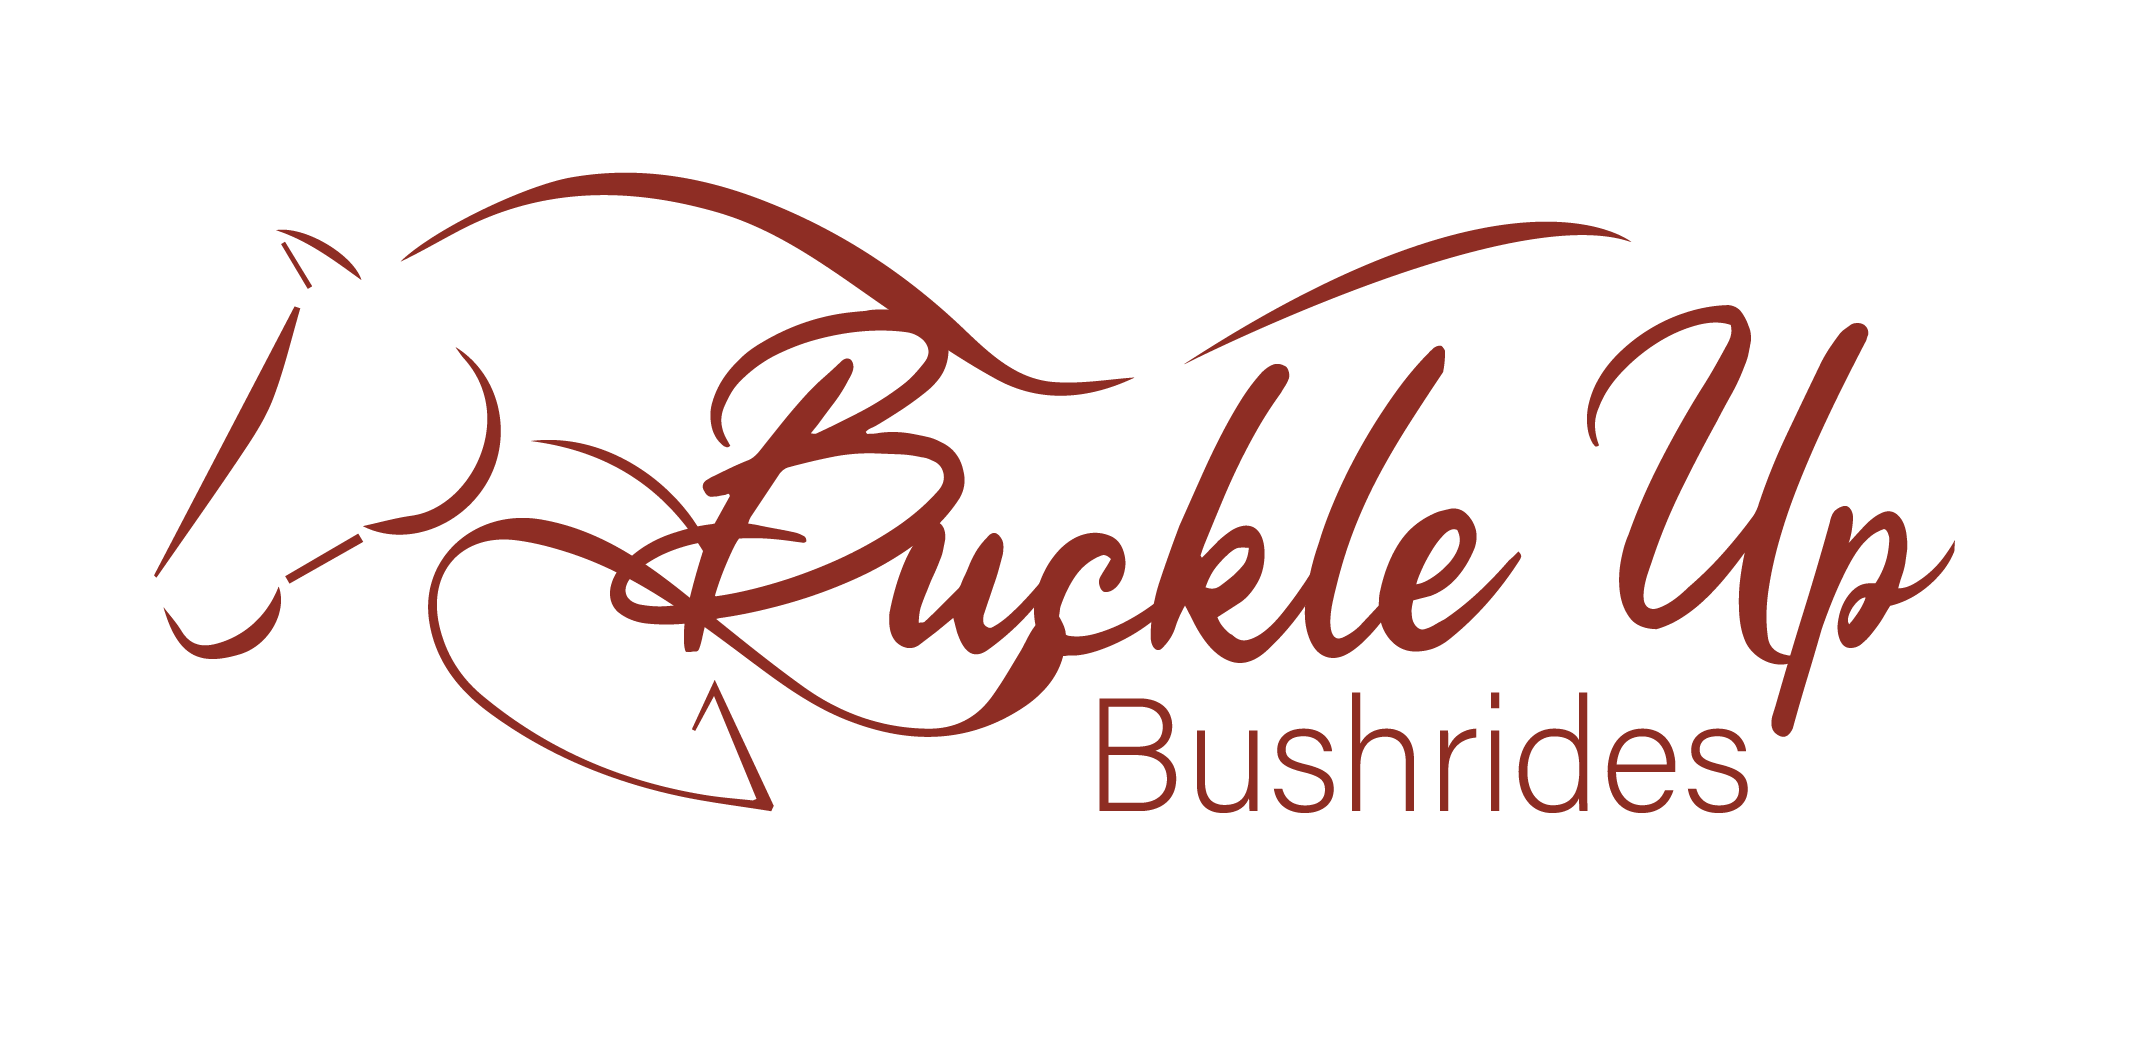 Buckle up bushrides final-01